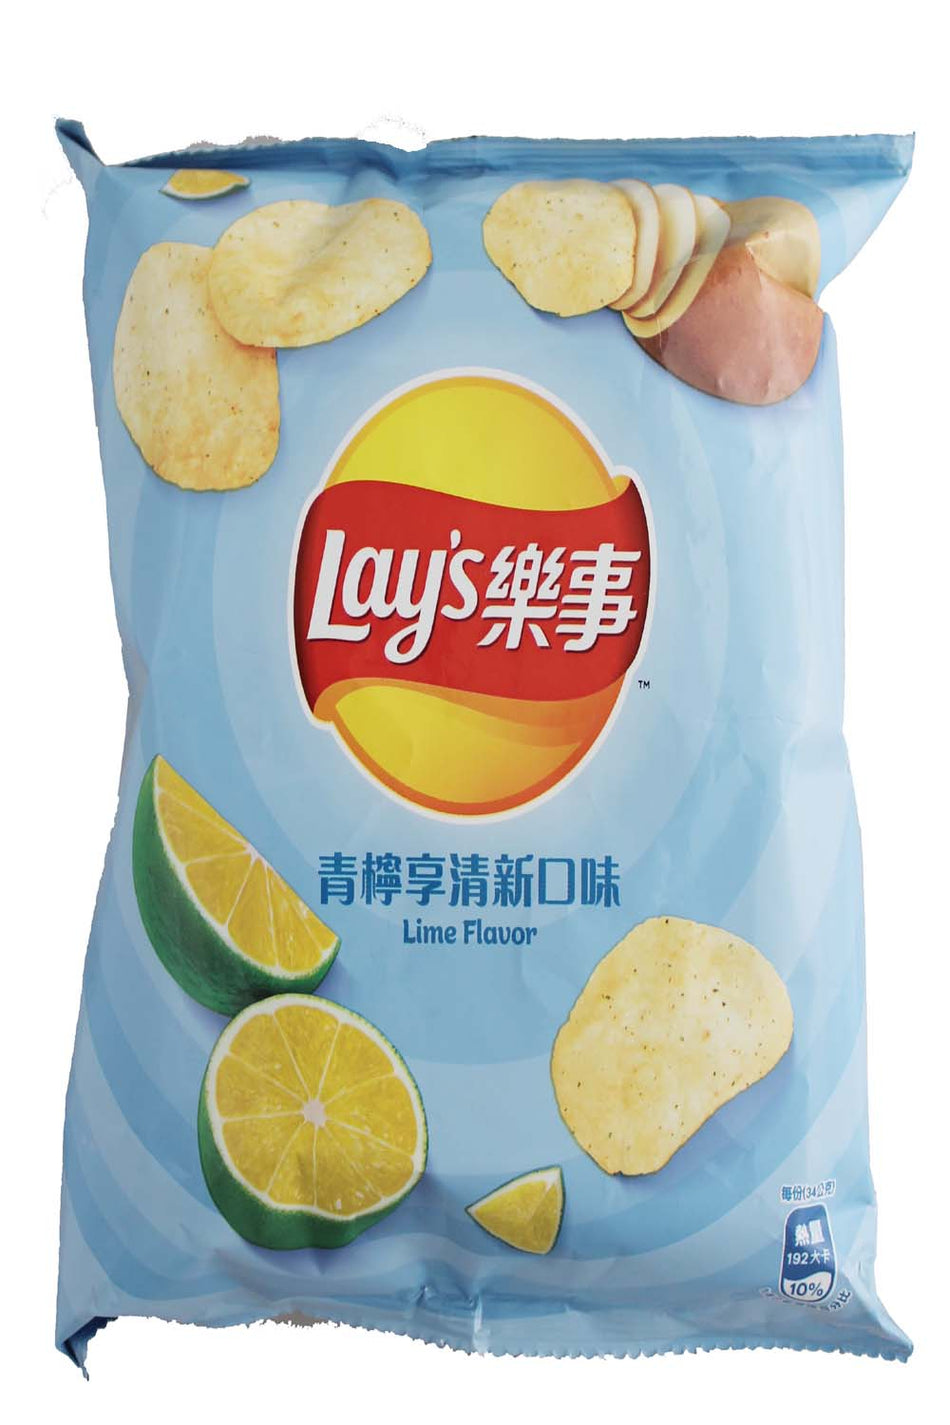 Lay's Potato Lemon Flavored Chips